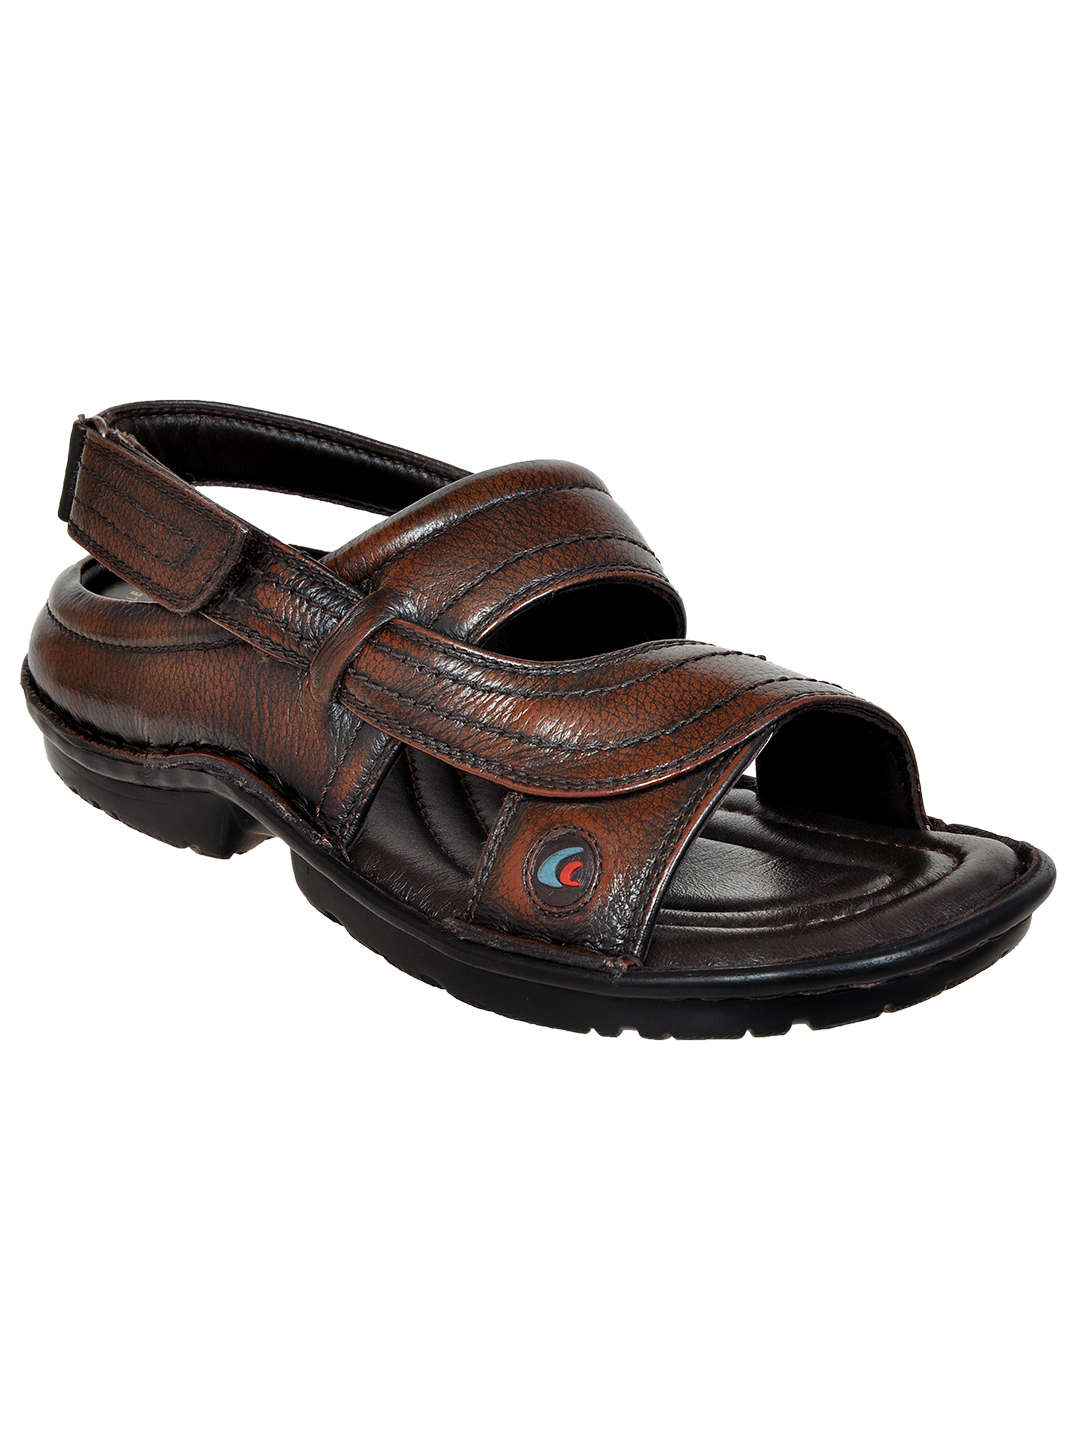 Buy Handmade Brown Men Leather Sandals Handcrafted Gents Sandal V Online in  India  Etsy